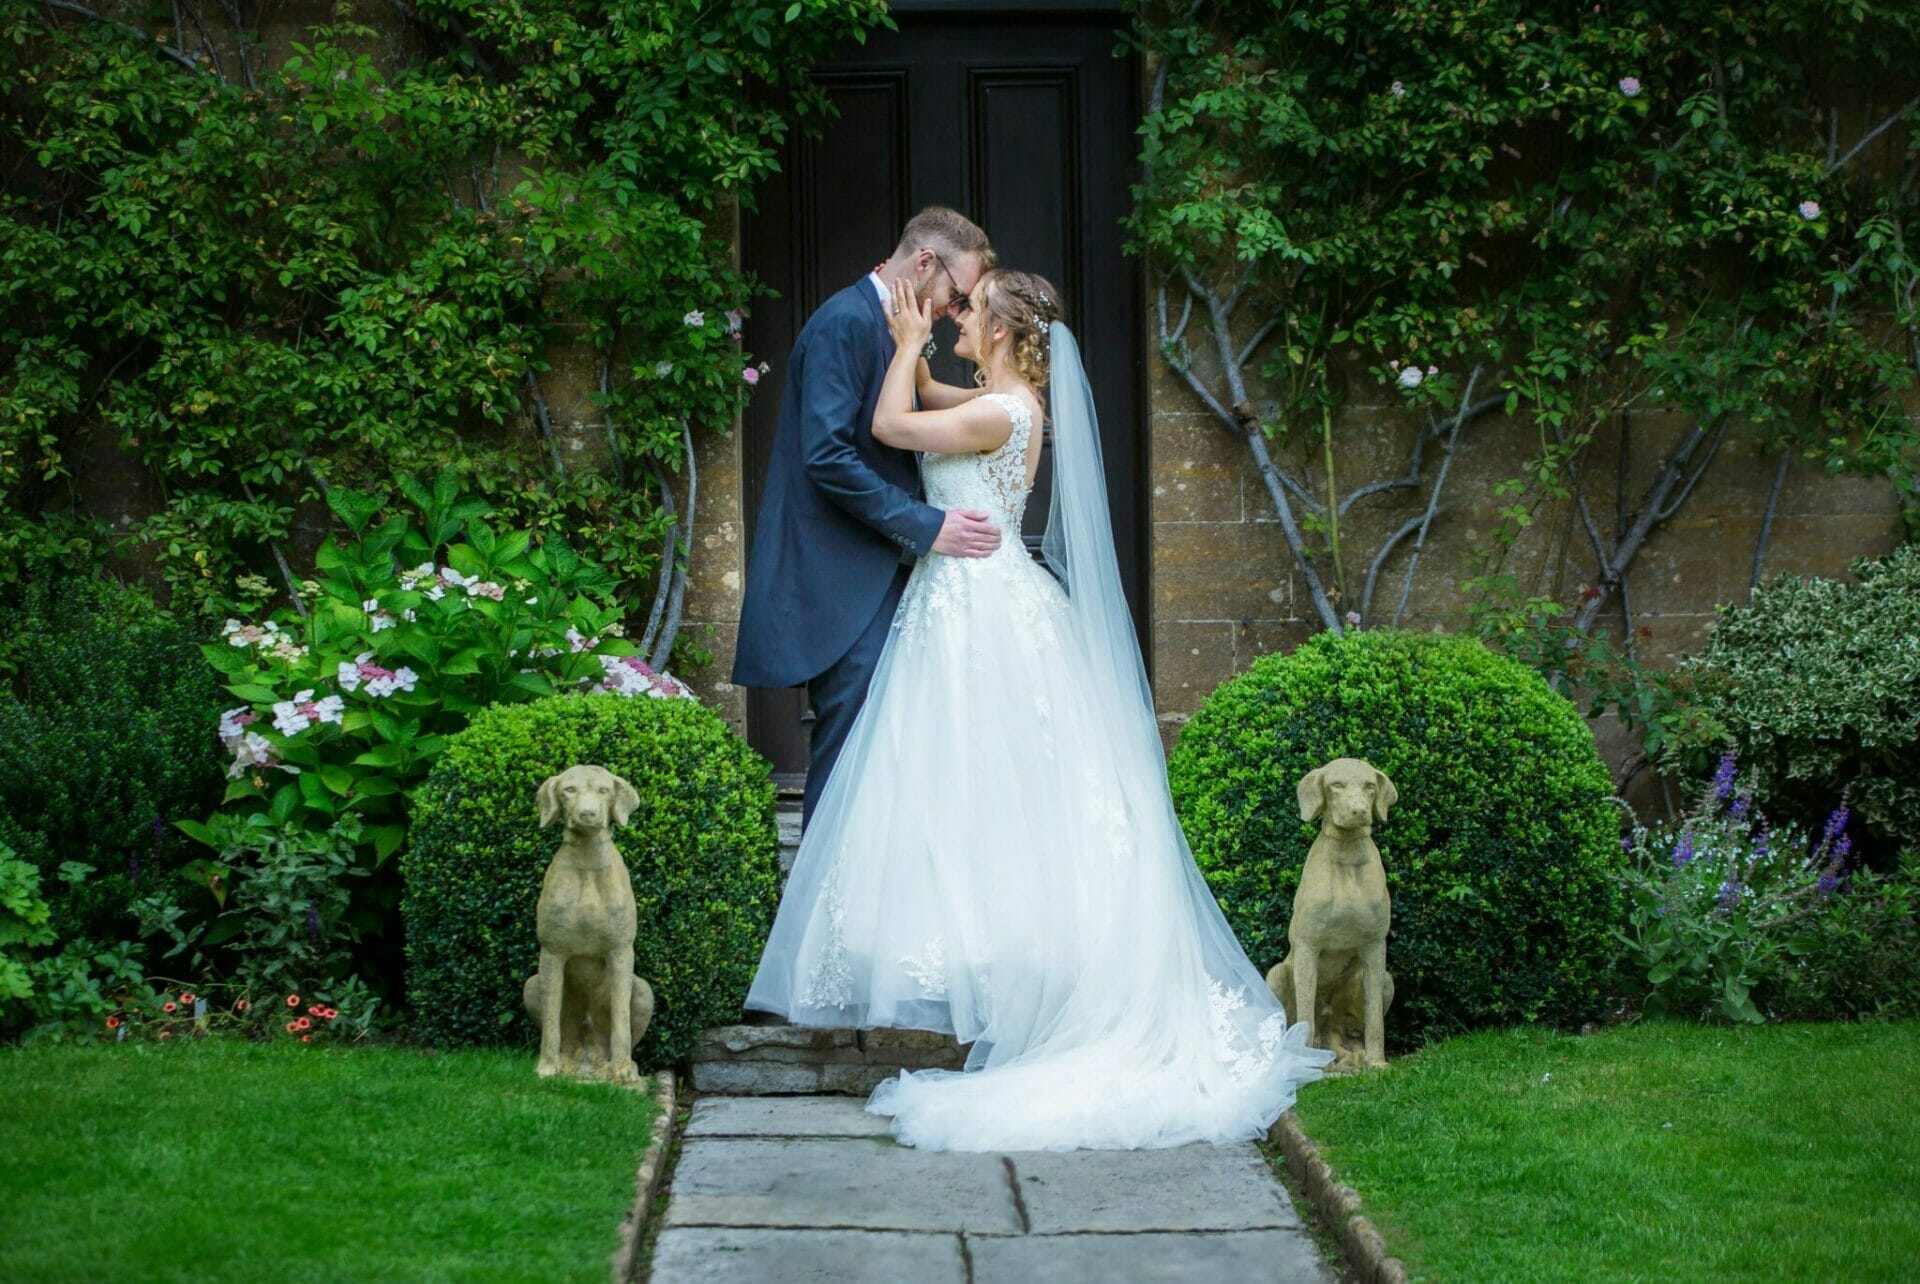 Sammi & Tom’s Wedding at Haselbury Mill by Crewkerne Wedding Photographer, Victoria Welton